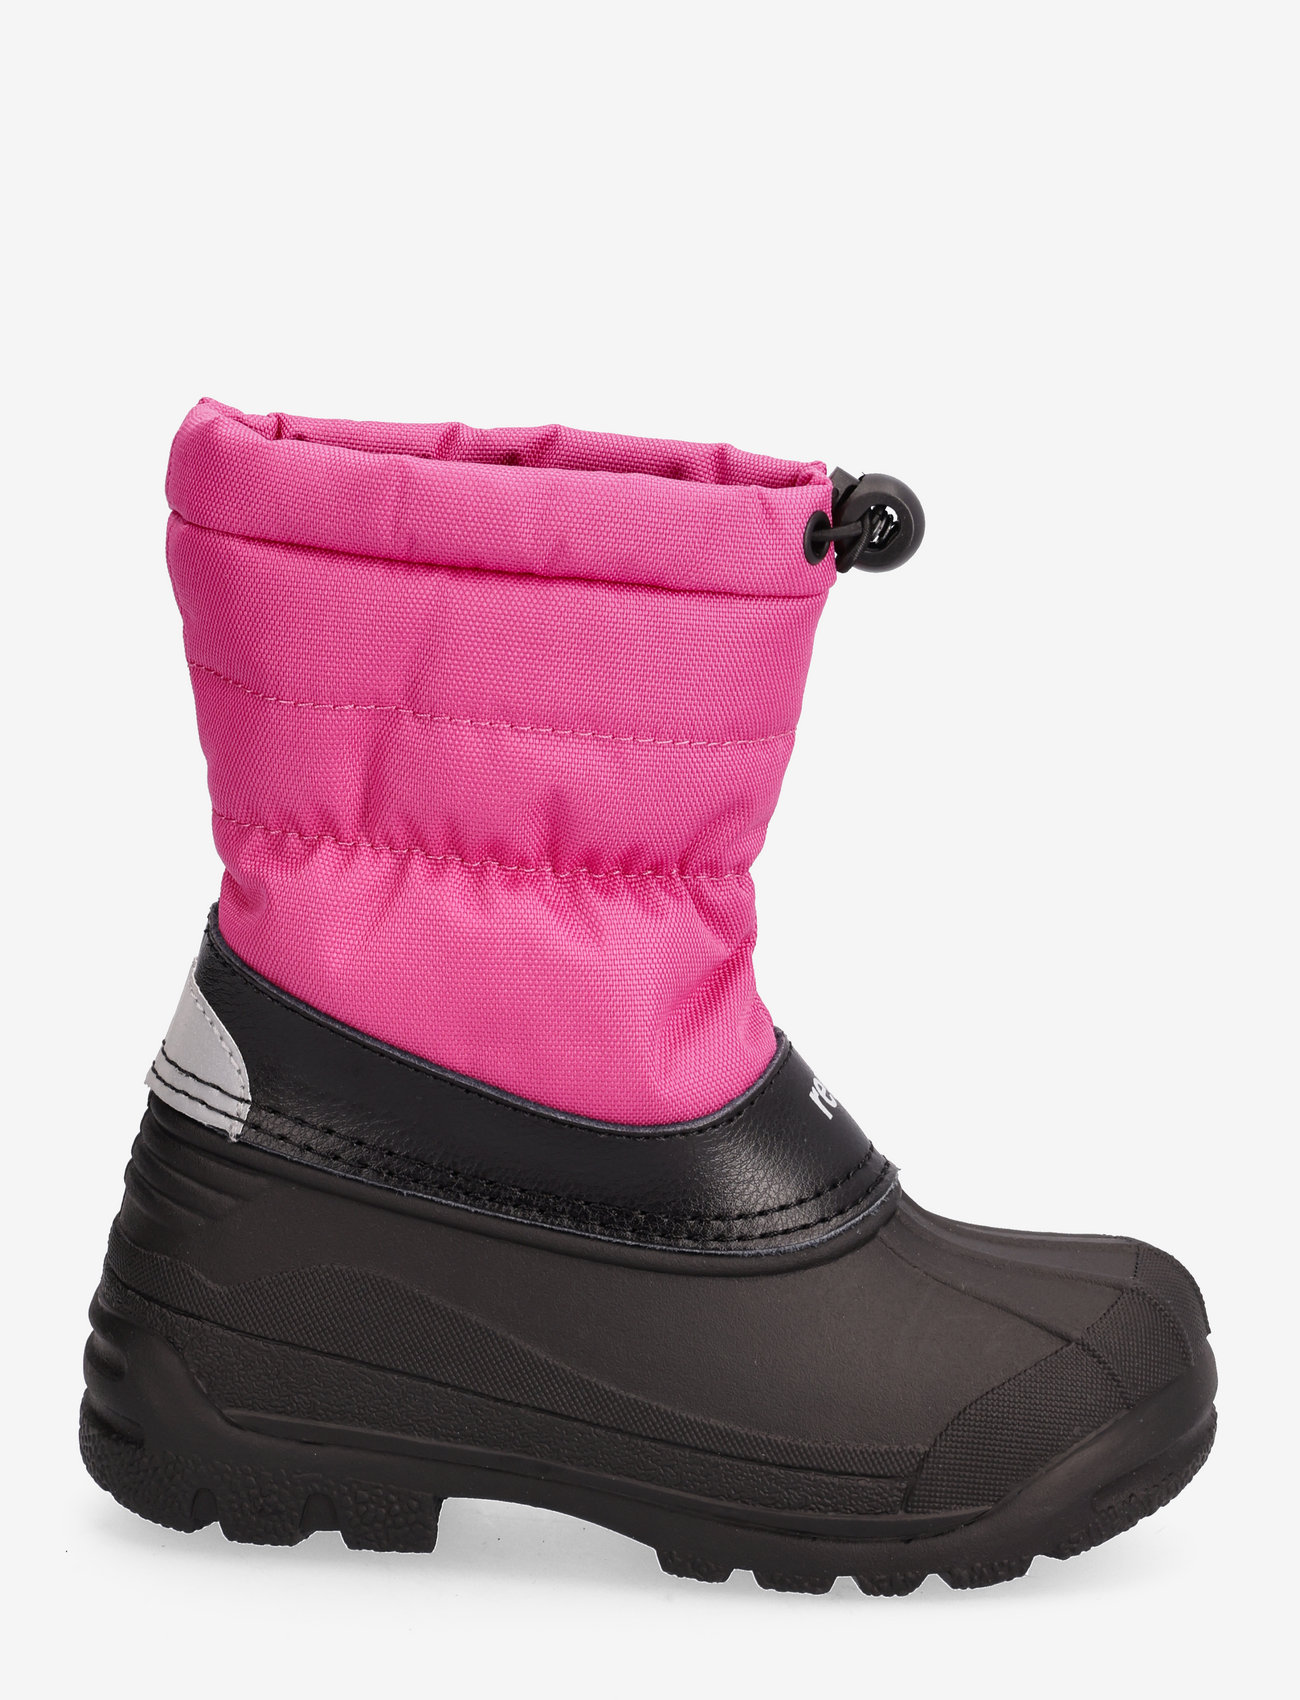 Reima - Winter boots, Nefar - kinder - magenta purple - 1